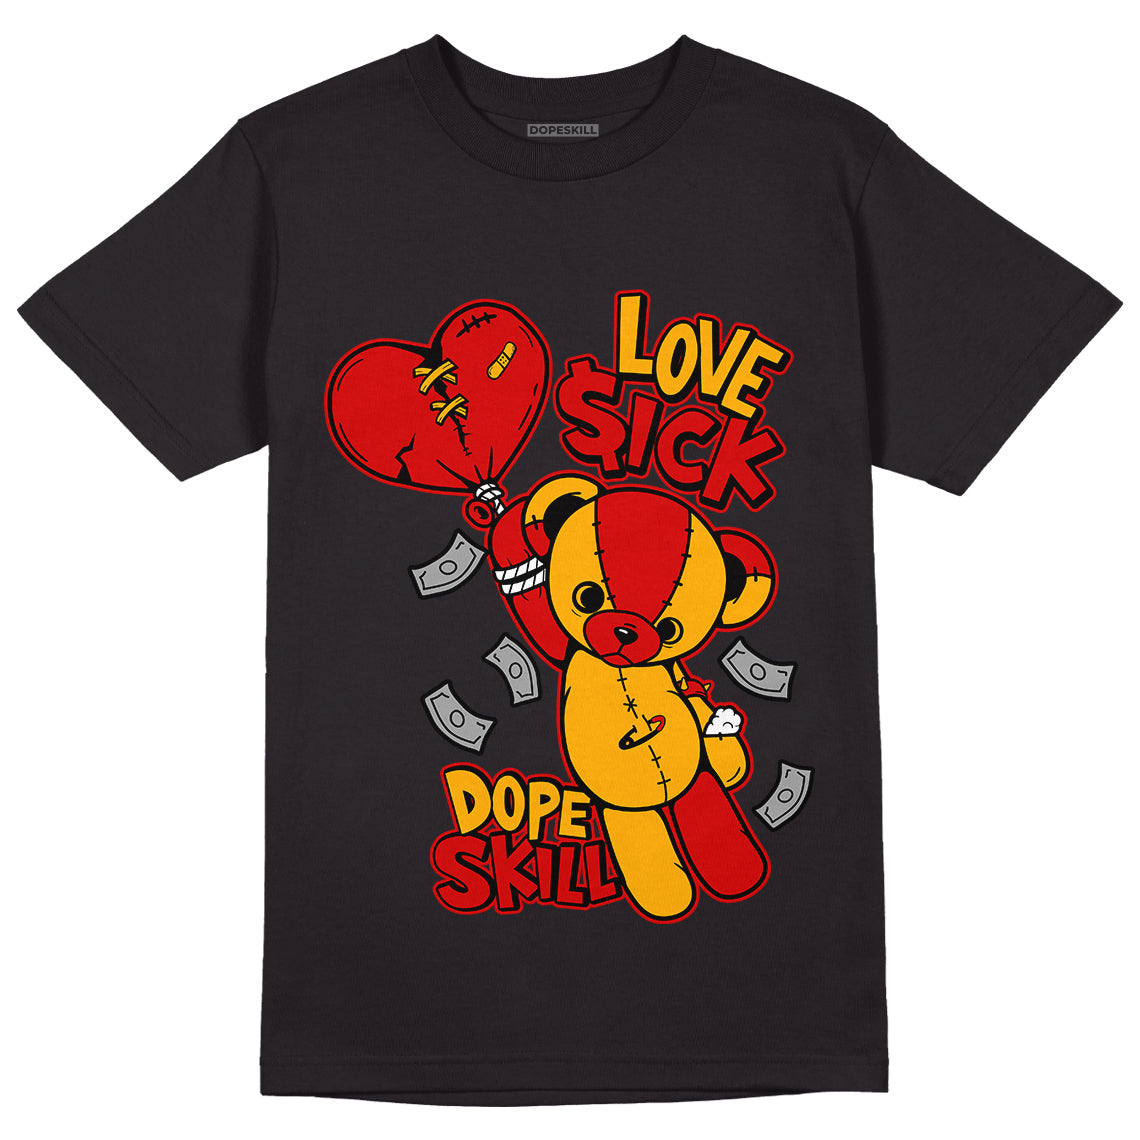 Jordan 7 Citrus DopeSkill T-Shirt Love Sick Graphic - Black